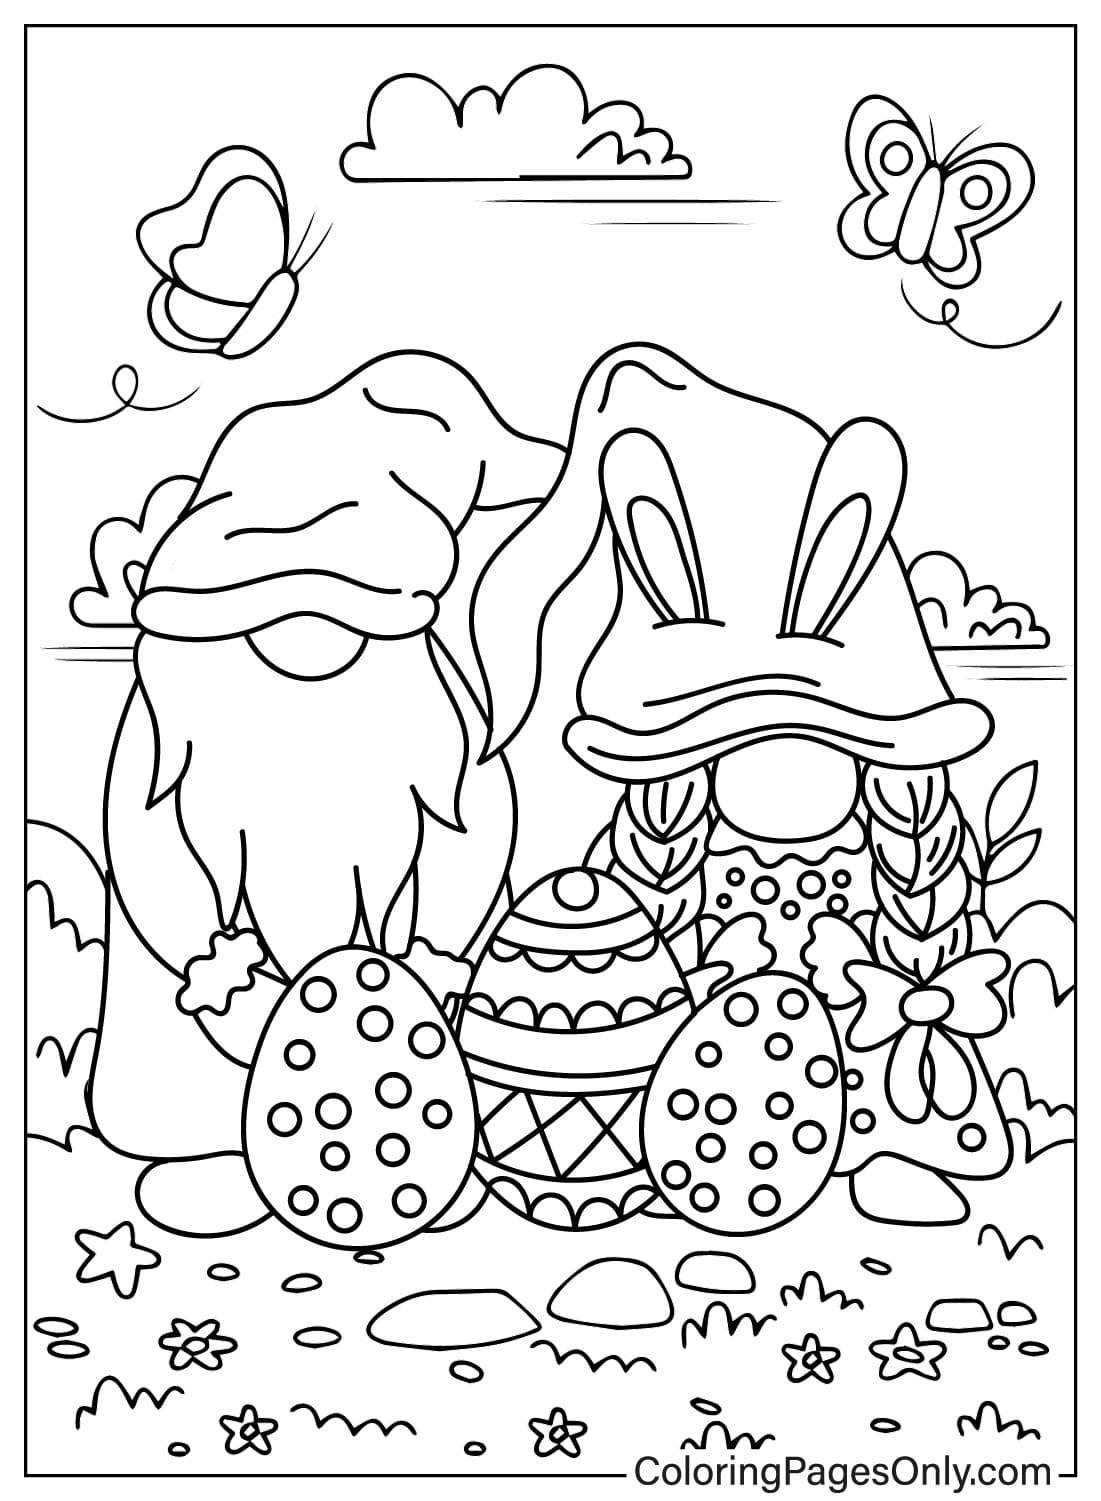 Página para colorear de Gnomo de Pascua imprimible de Gnomo de Pascua